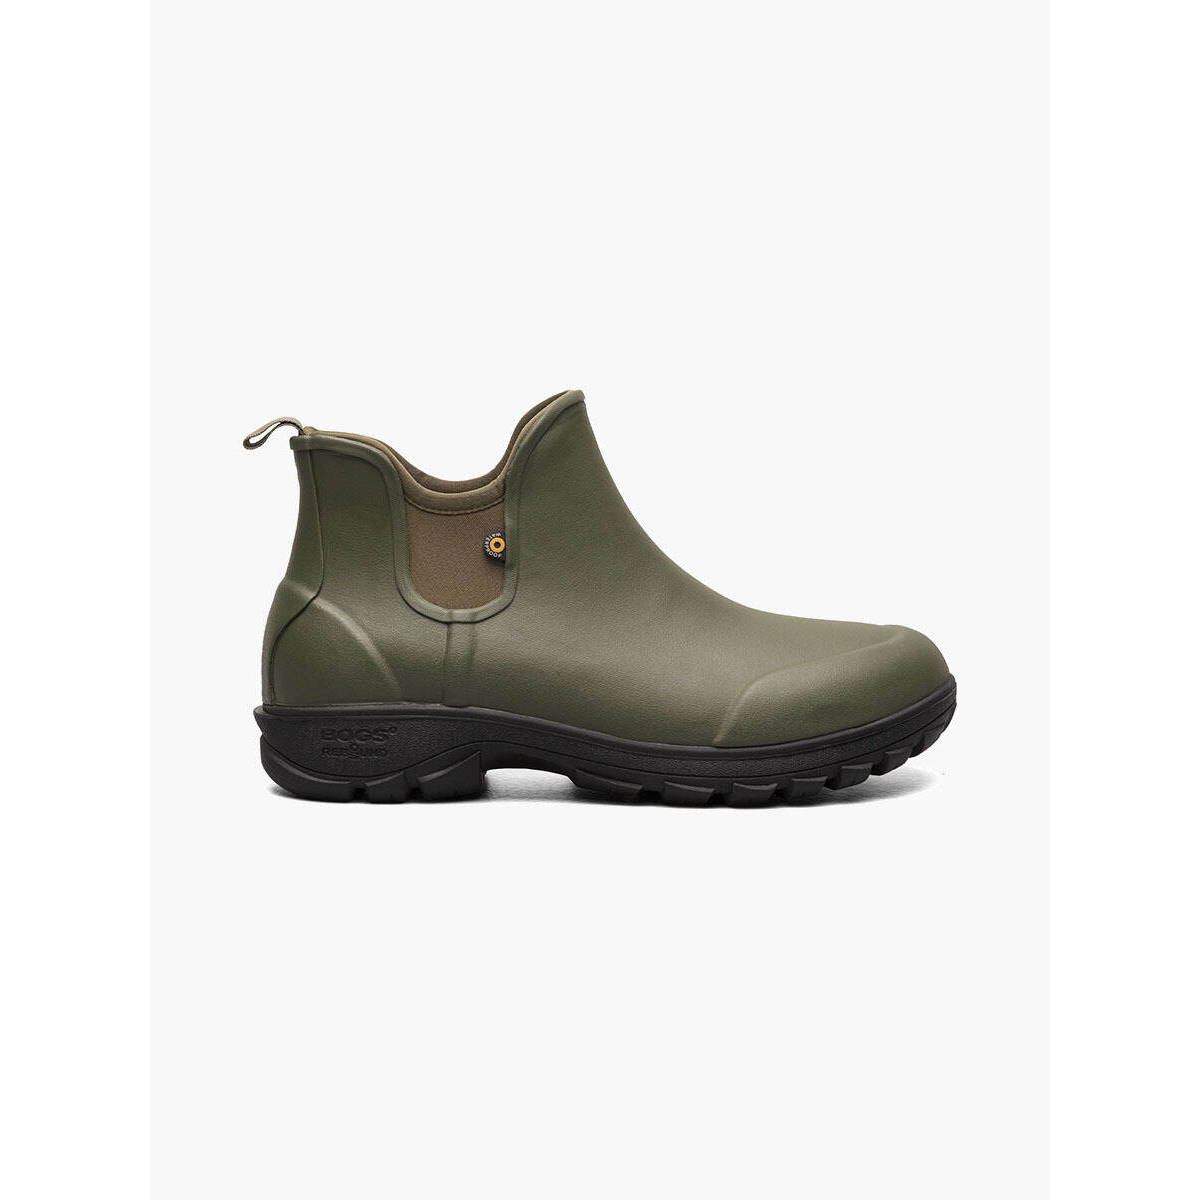 BOGS Men's Sauvie Slip On Insulated Waterproof Rain Boot Olive Multi - 72208-302 - OLIVE MLTI, 12